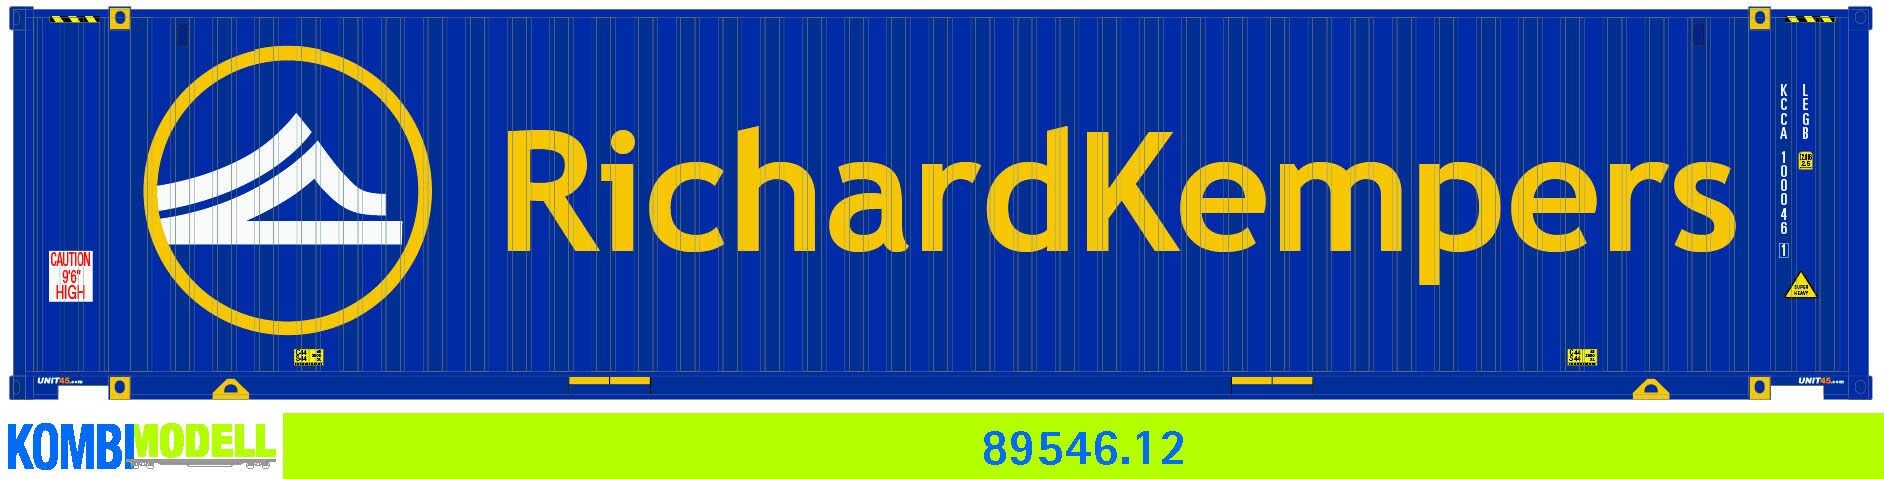 Kombimodell 89546.12 WB-A /Ct 45' (Euro) Richard Kempers"  (neues Logo" KCCU 100046